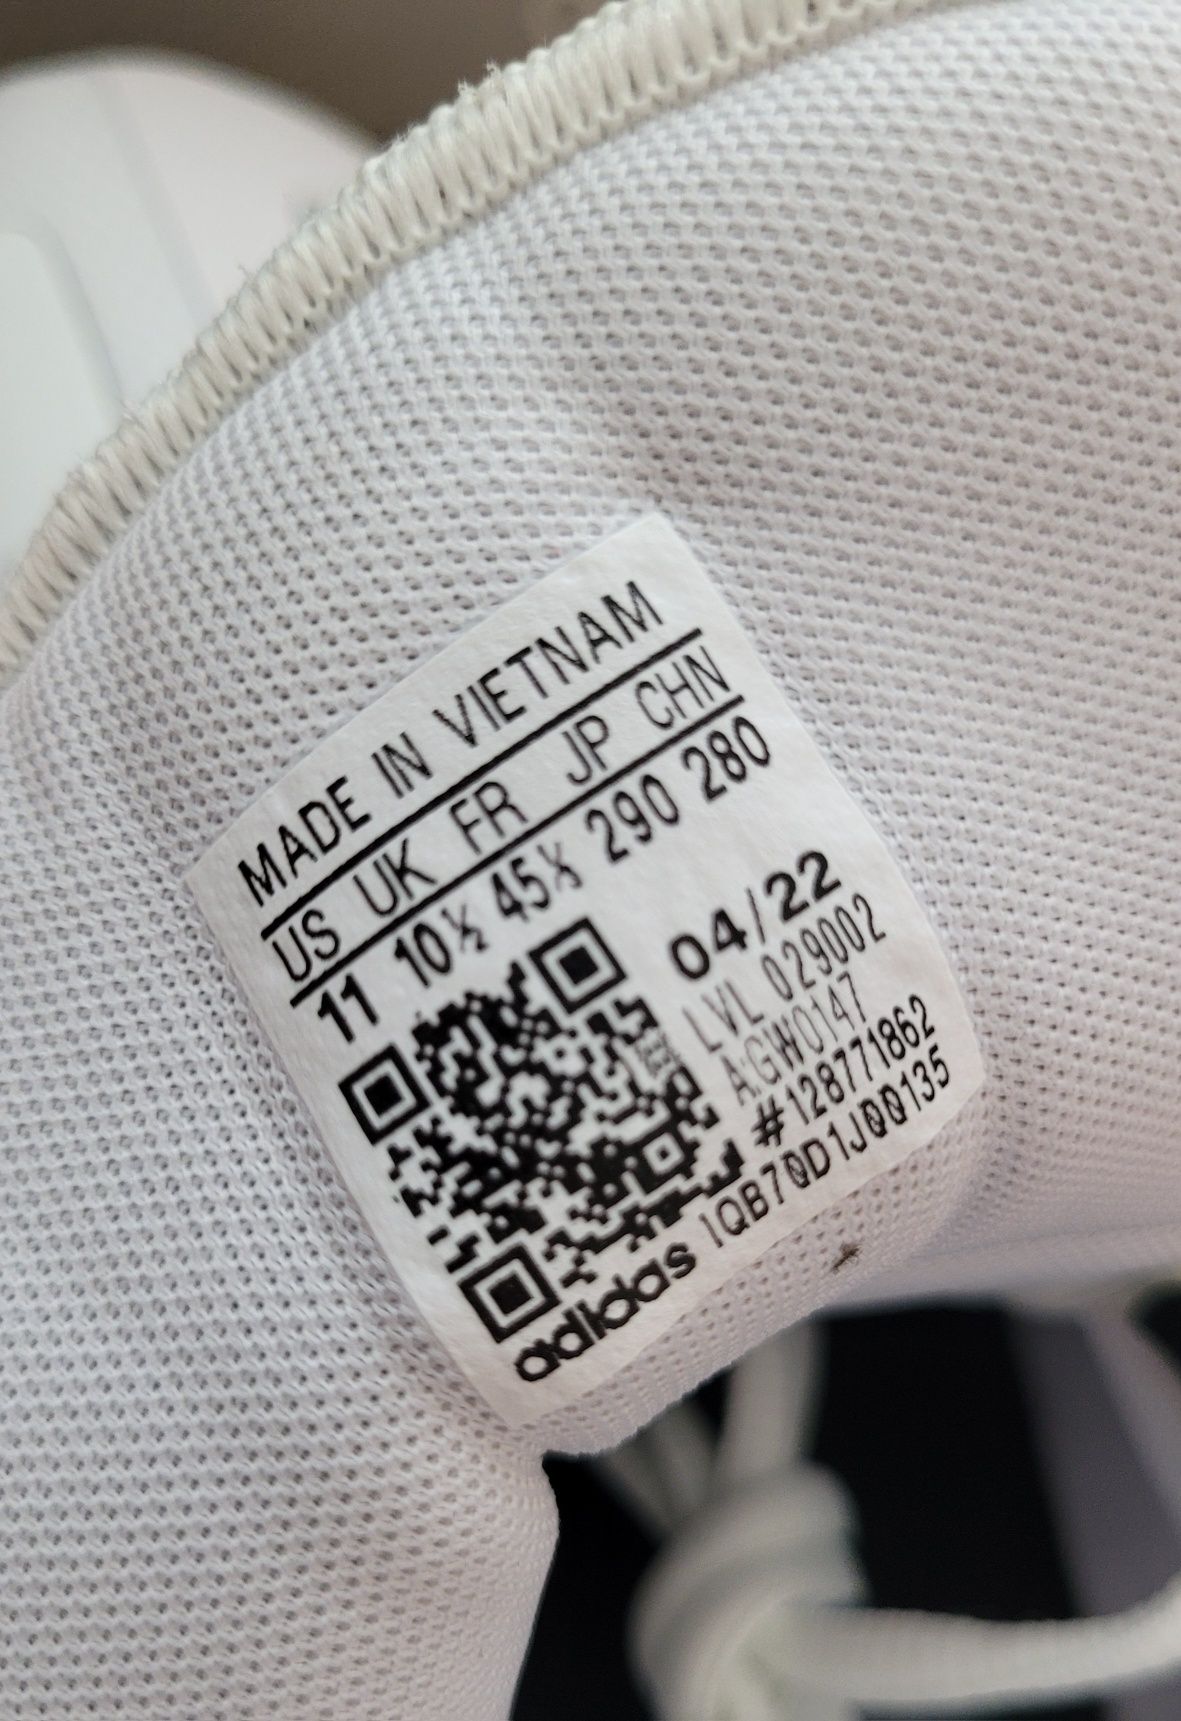 Adidas pro next rozmiar 45 1/3